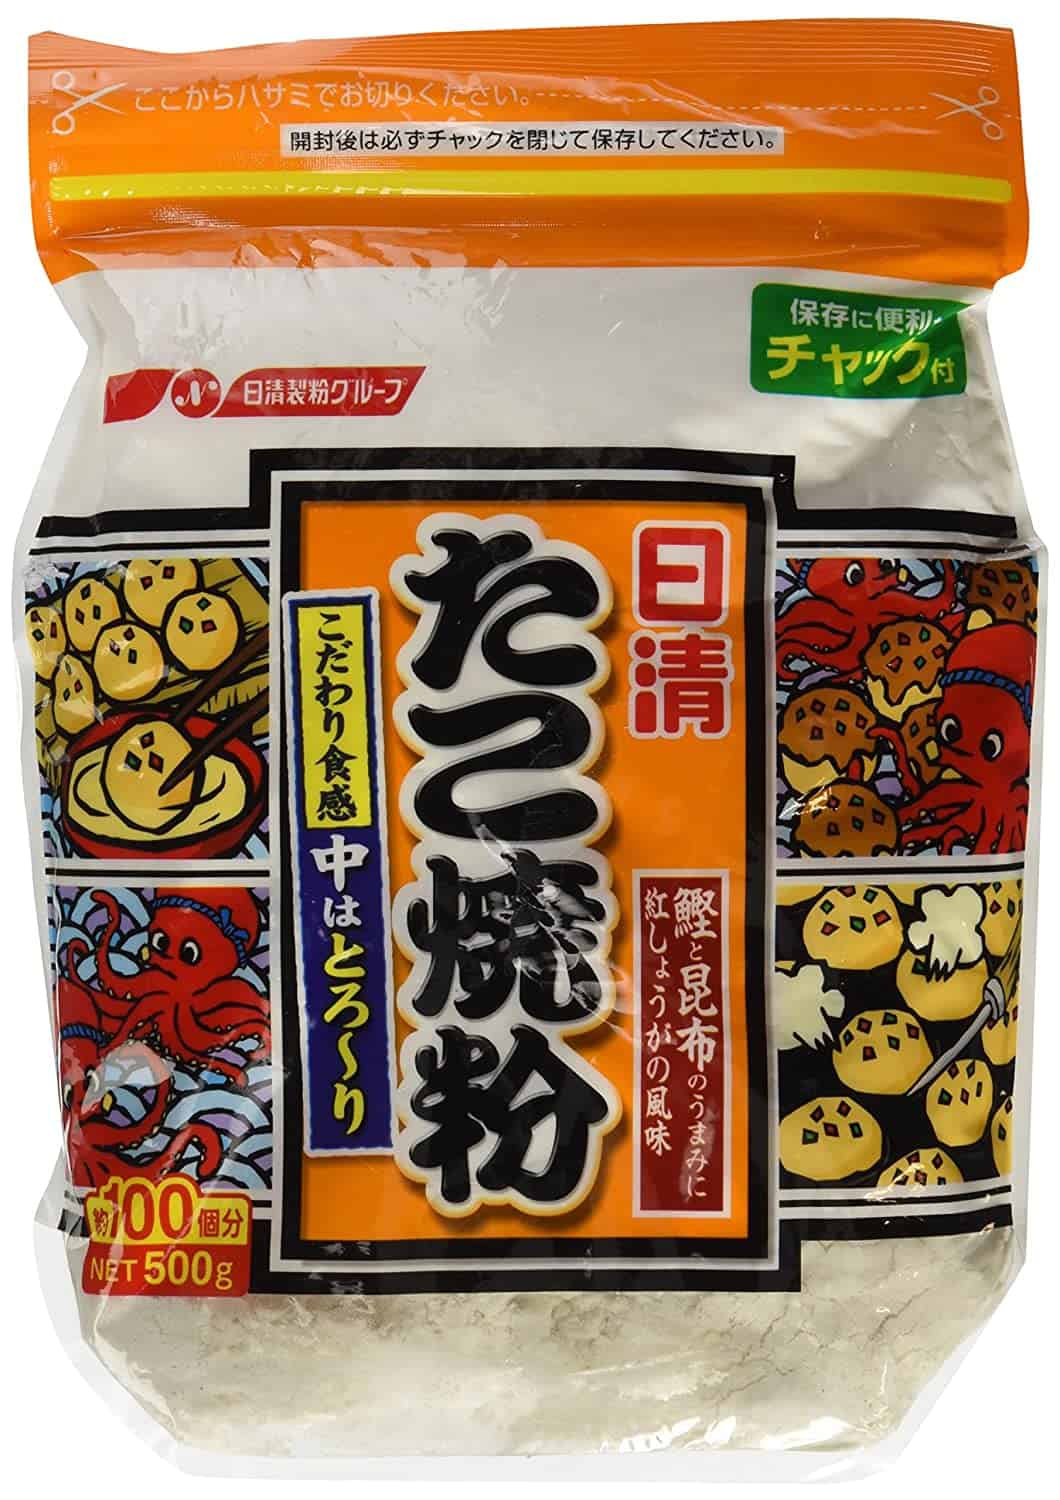 Motsoako oa pele oa takoyaki batter- Powder ea Nissin Takoyaki 500g